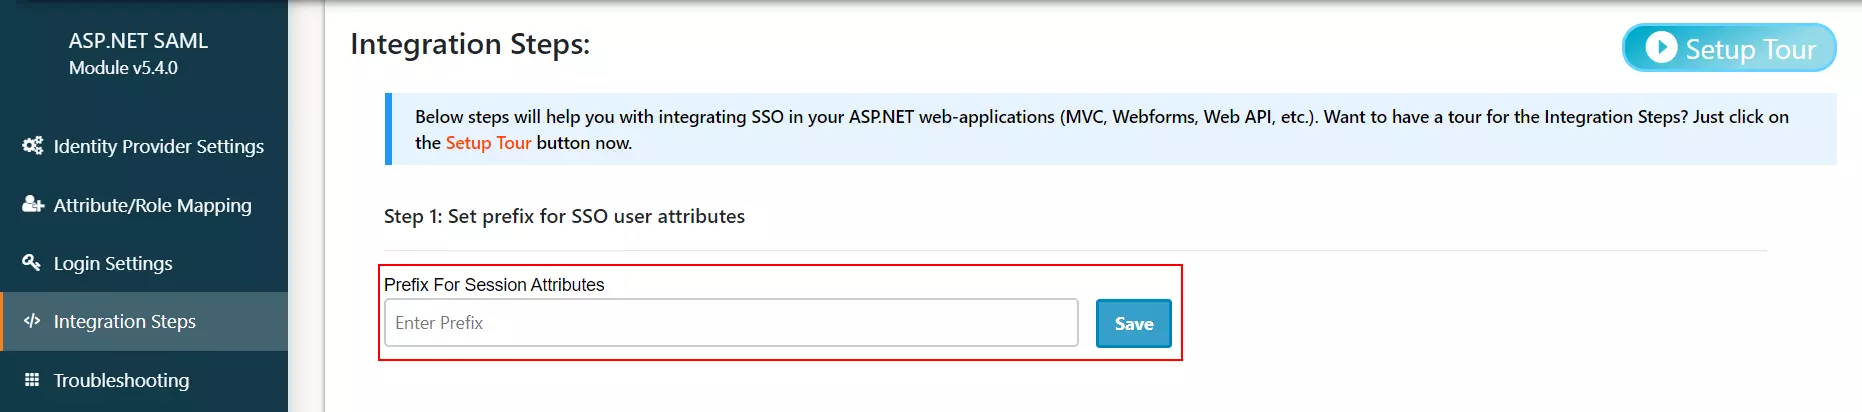 ASP.NET SAML Single Sign-On (SSO) using Azure B2C as IDP - Prefix SSO Attributes